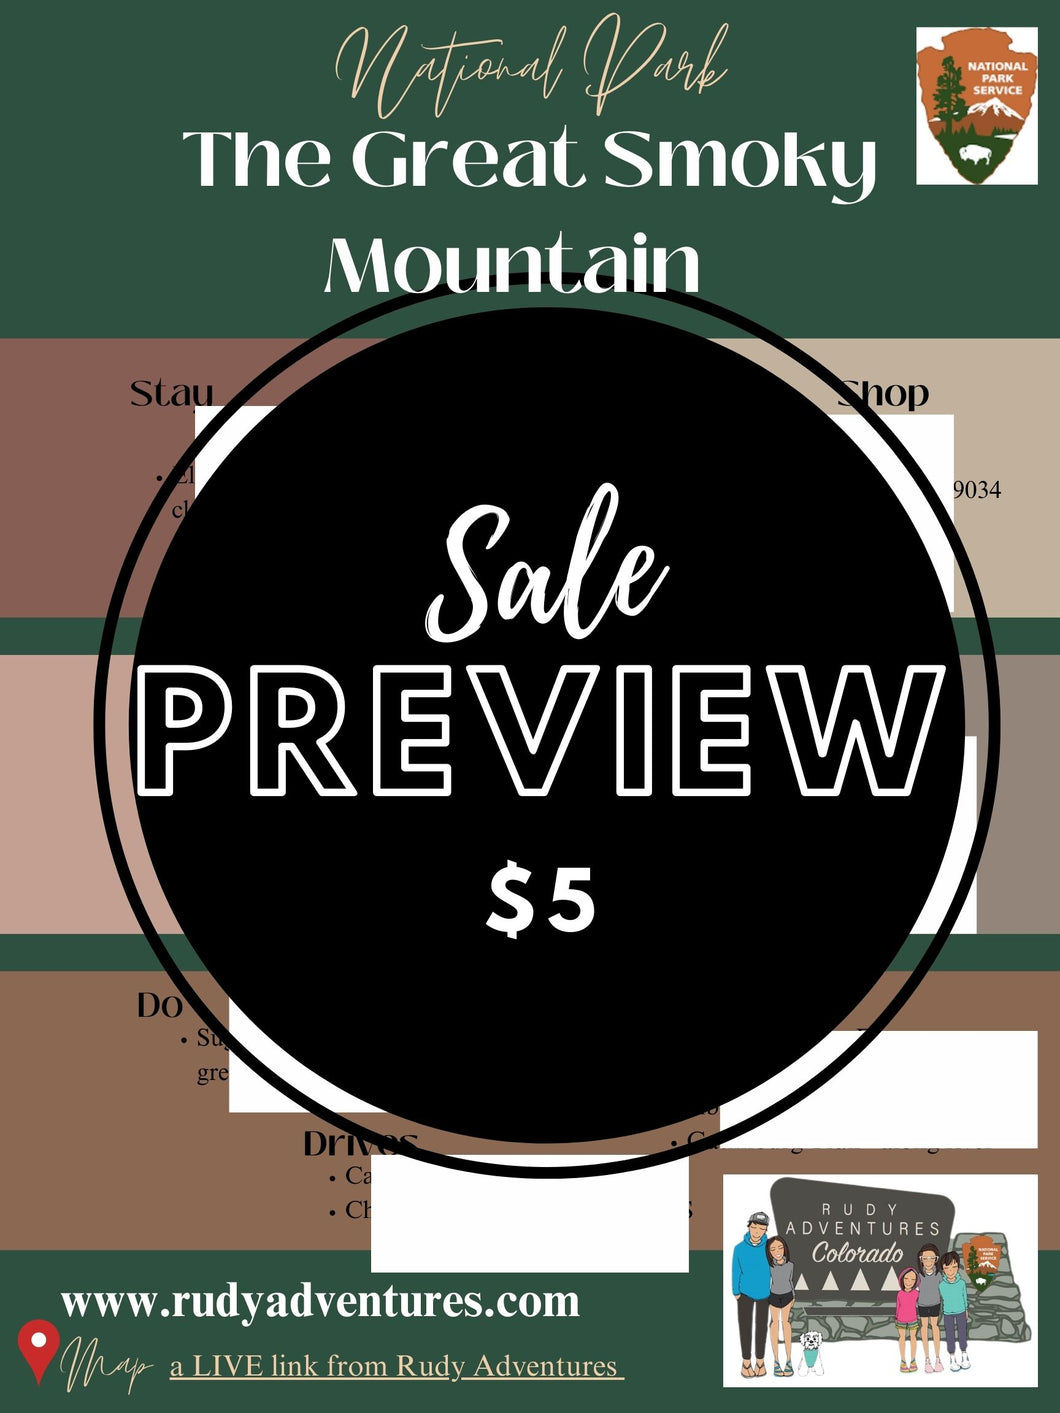 Travel Cards - Smoky Mountain National Park